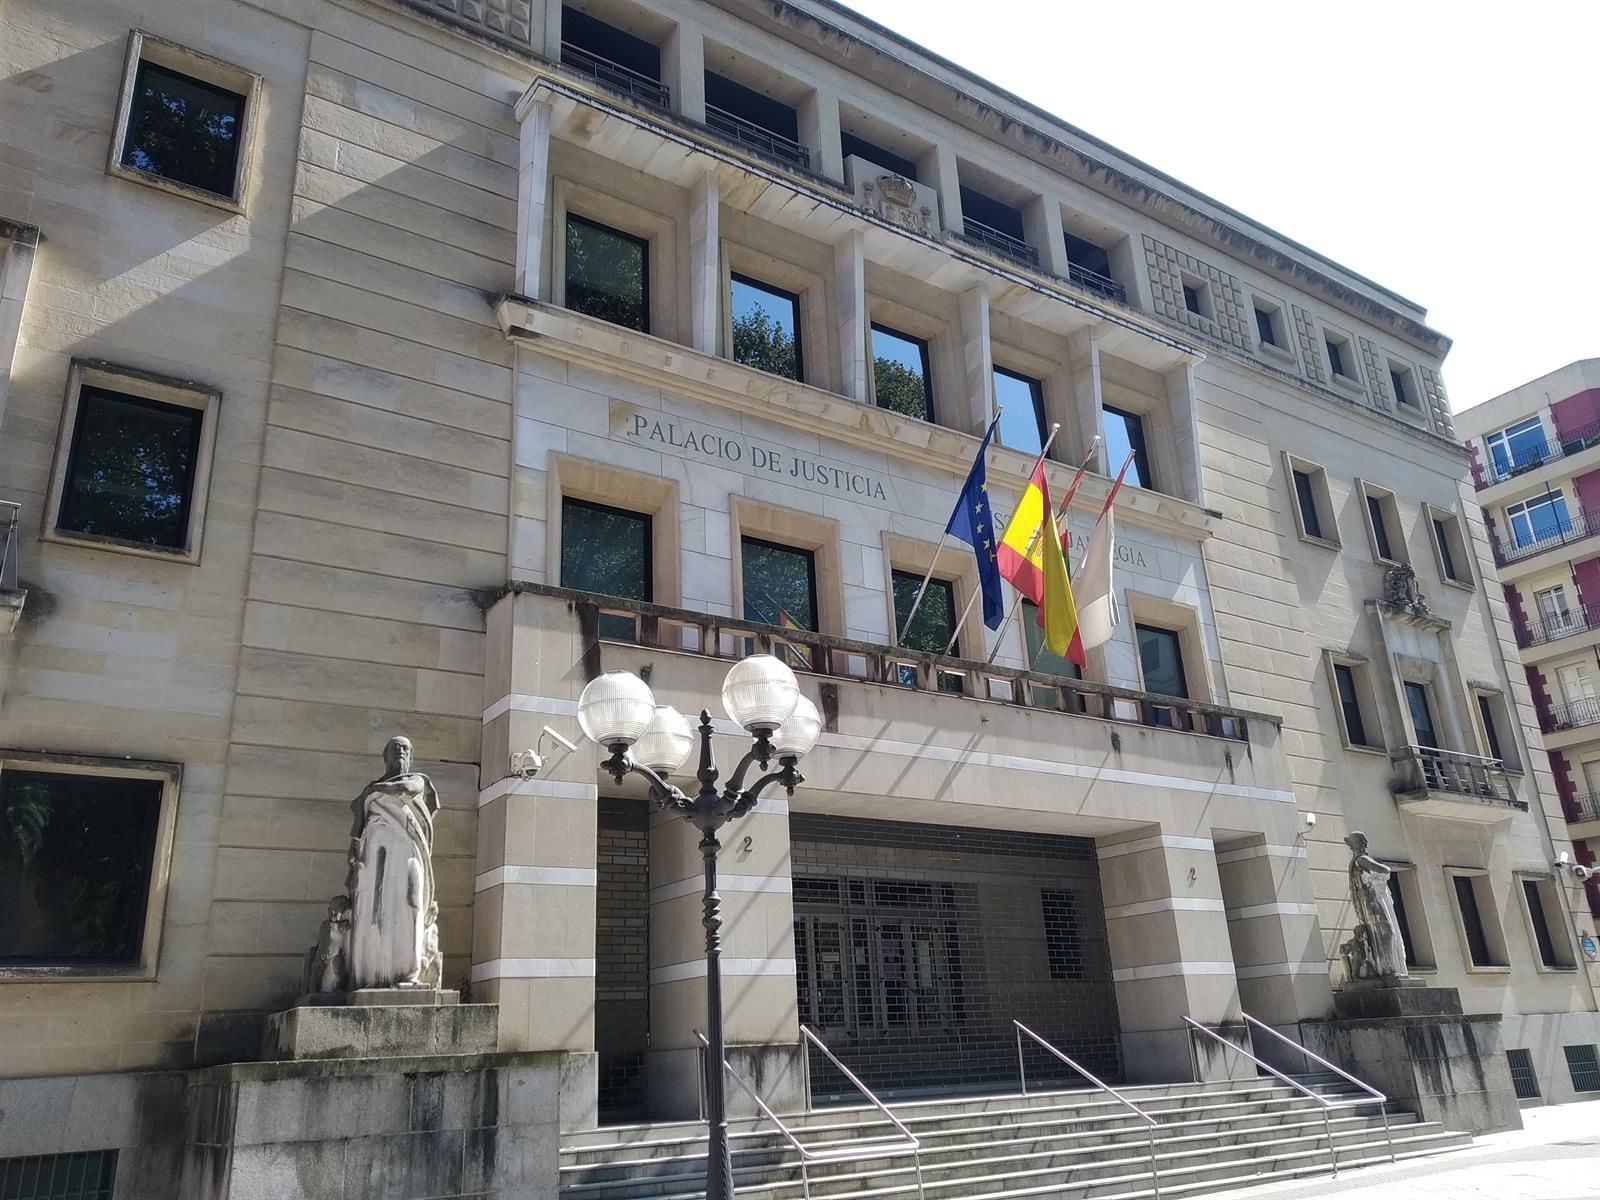 13/09/2020 Sede del TSJPV en Bilbao
POLITICA 
